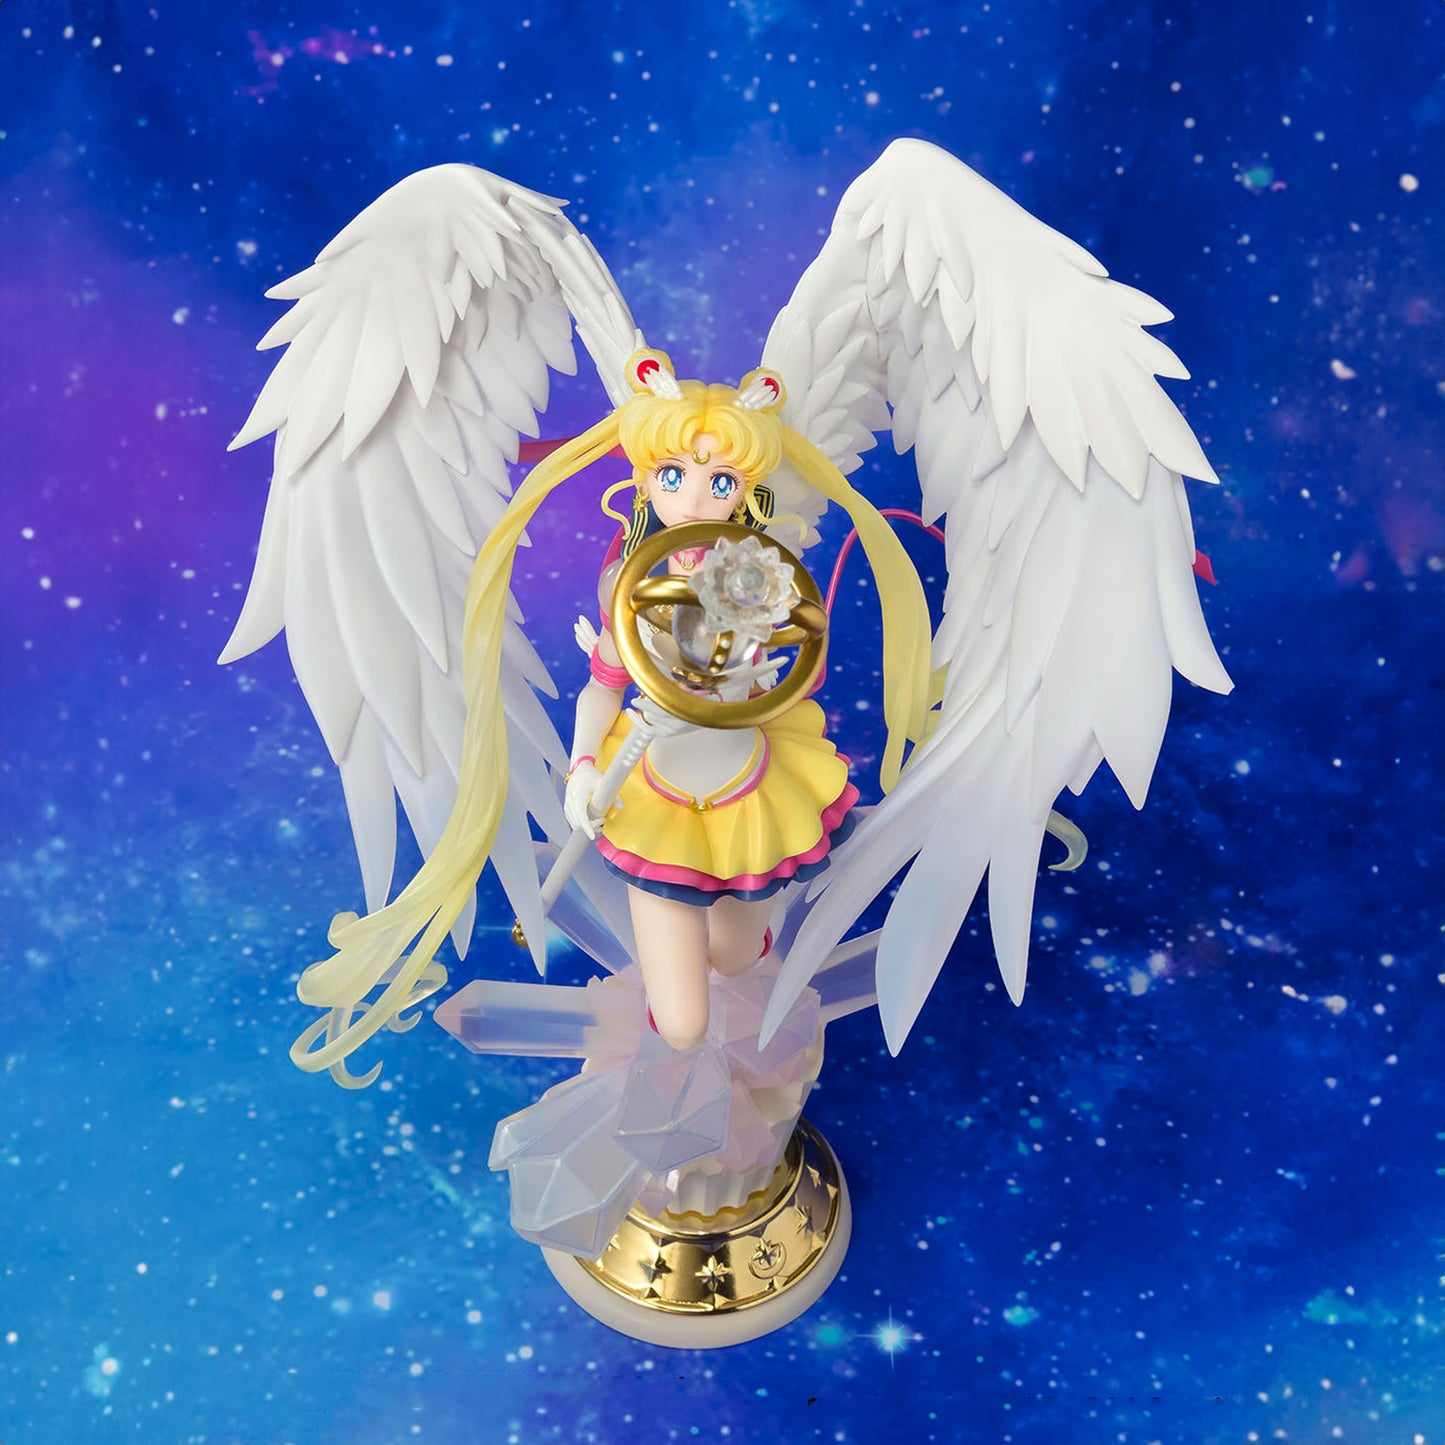 Eternal Sailor Moon (Sailor Moon Cosmos) "Darkness Calls to Light" Figuarts Zero Chouette Statue